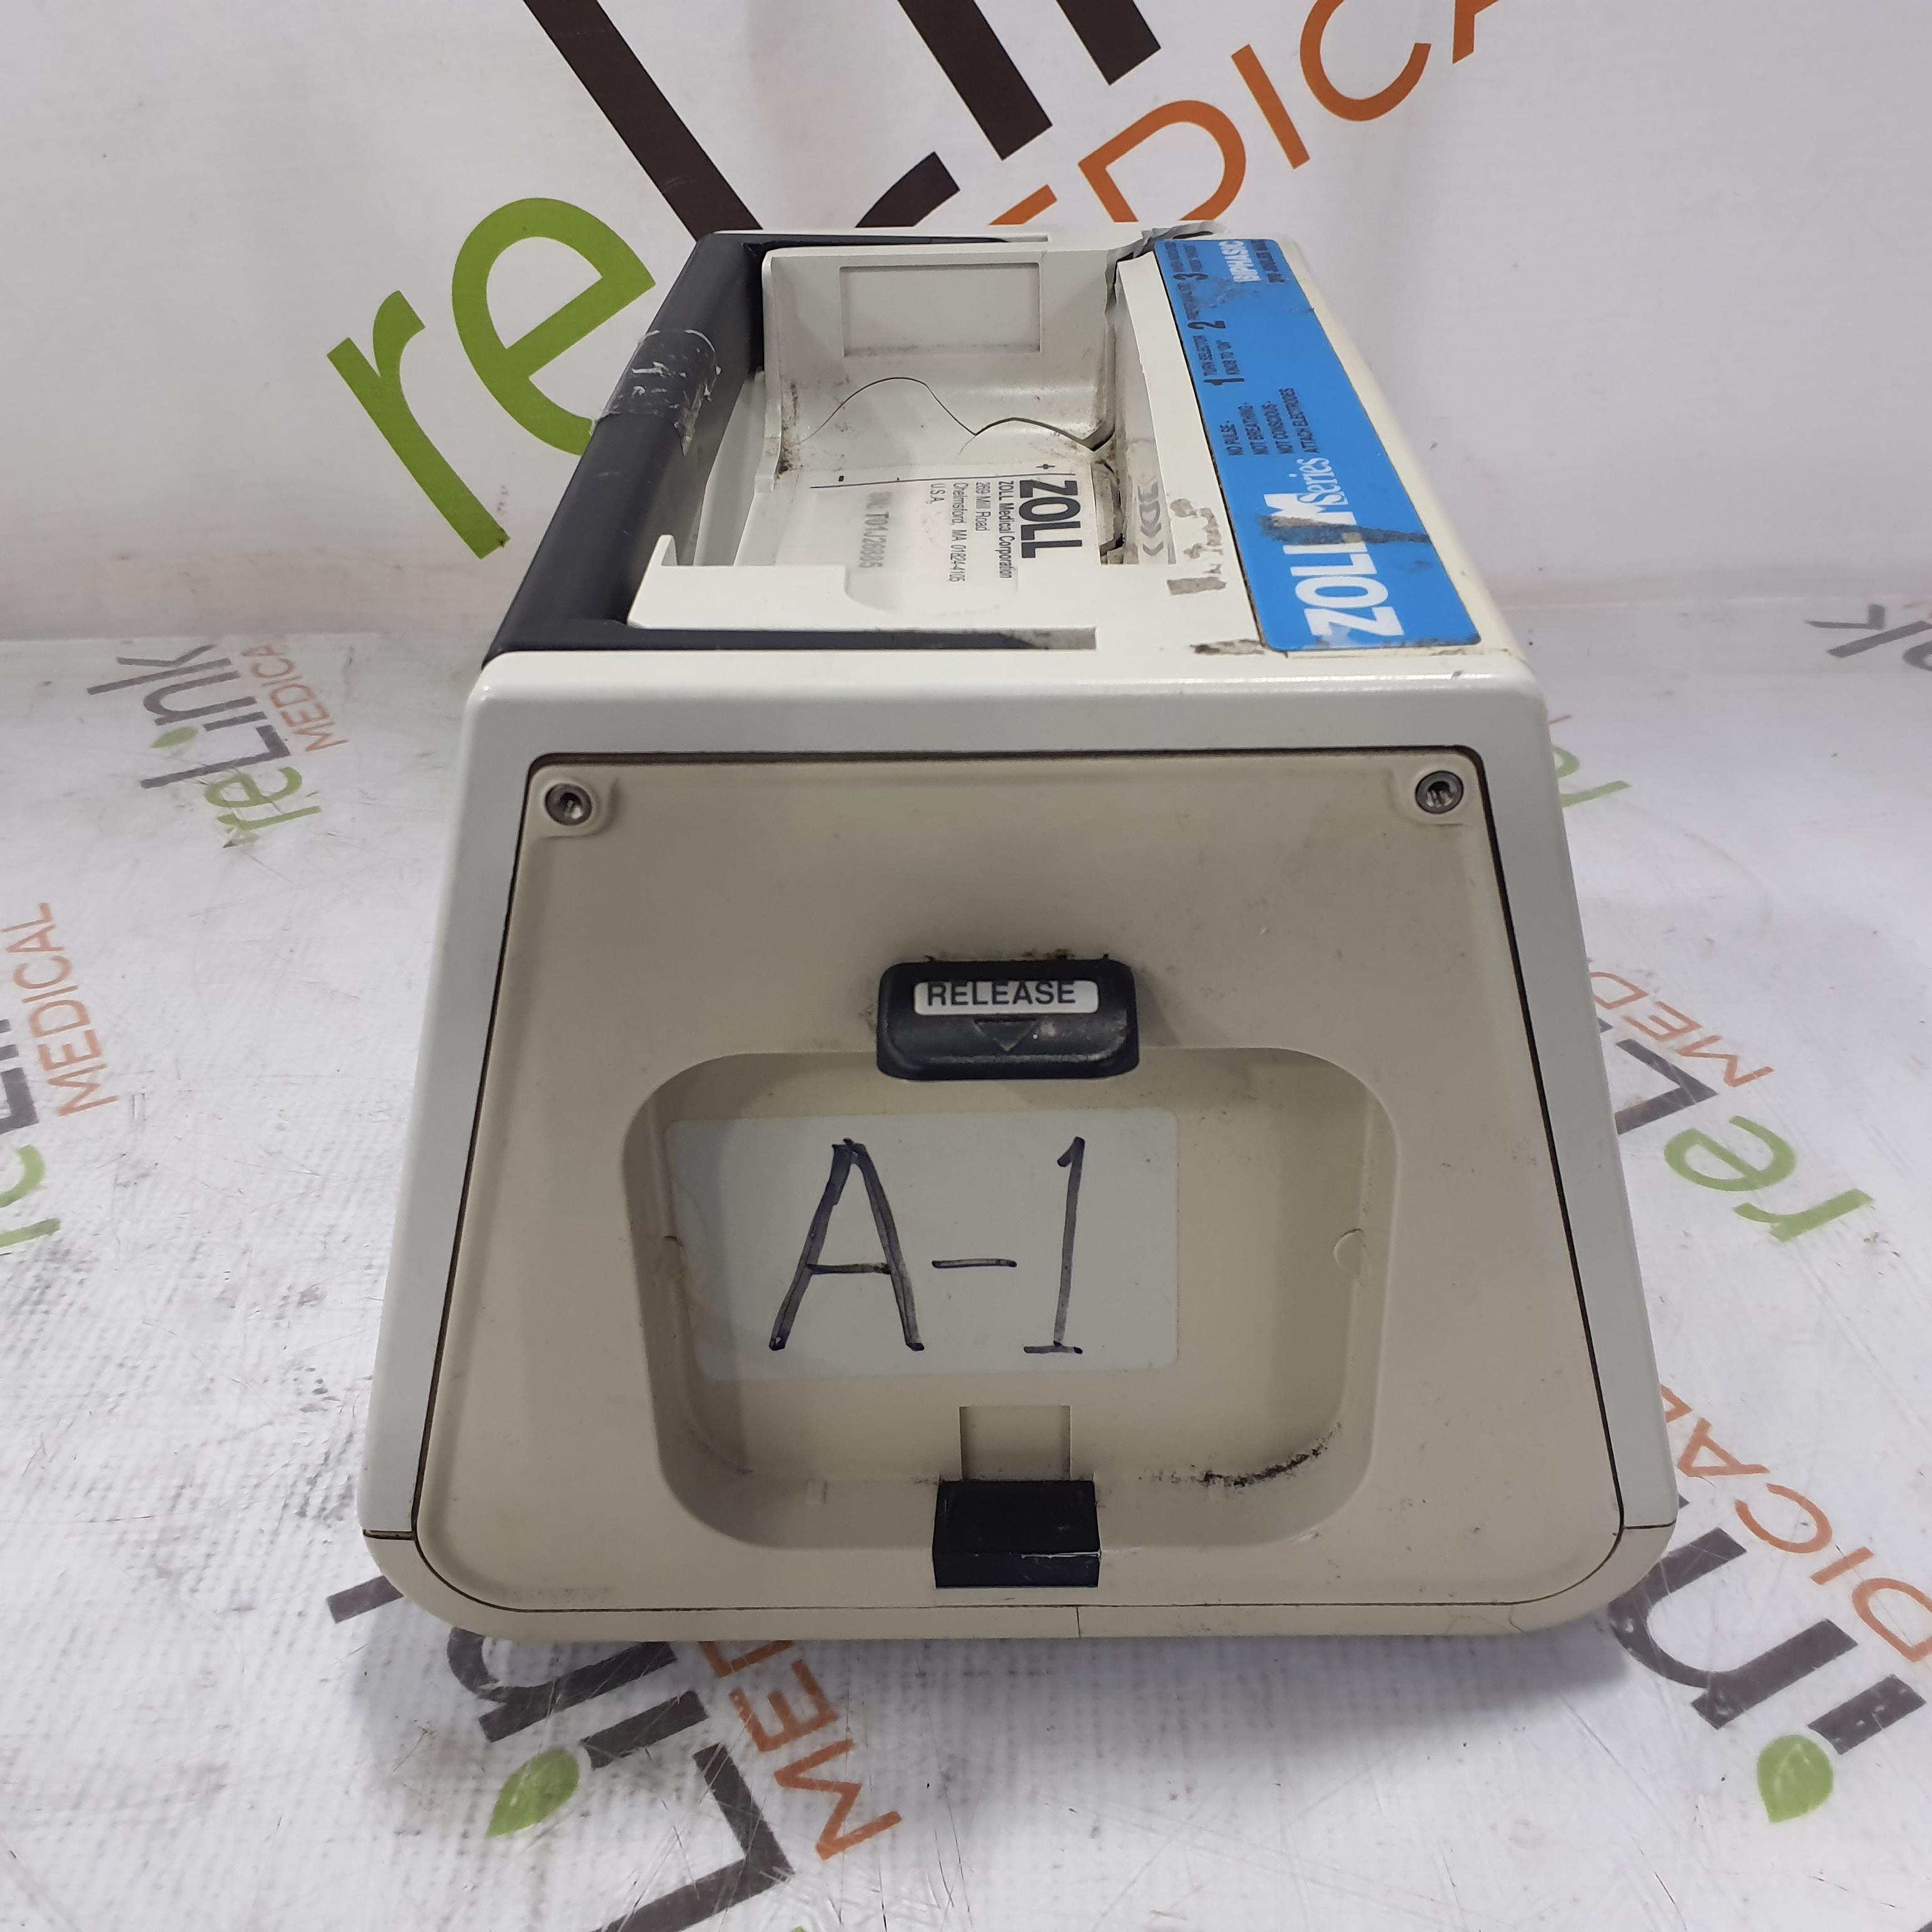 Zoll M Series Defibrillator - 377698